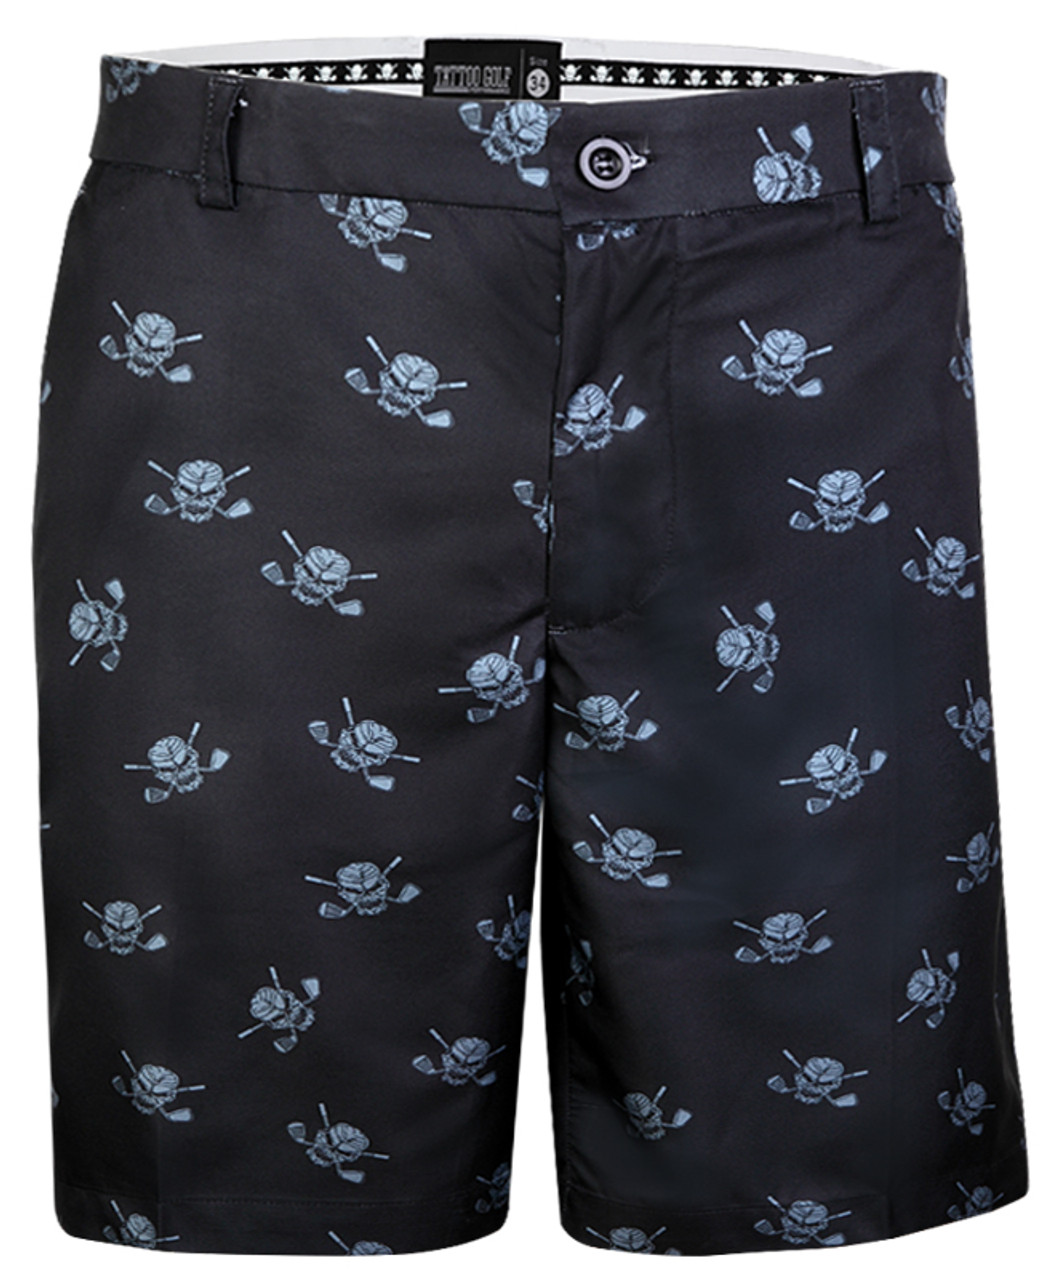 Camo Print ProCool Golf Pants (Black) Wild Golf Pants by Tattoo Brand -  Free Shipping Skull design